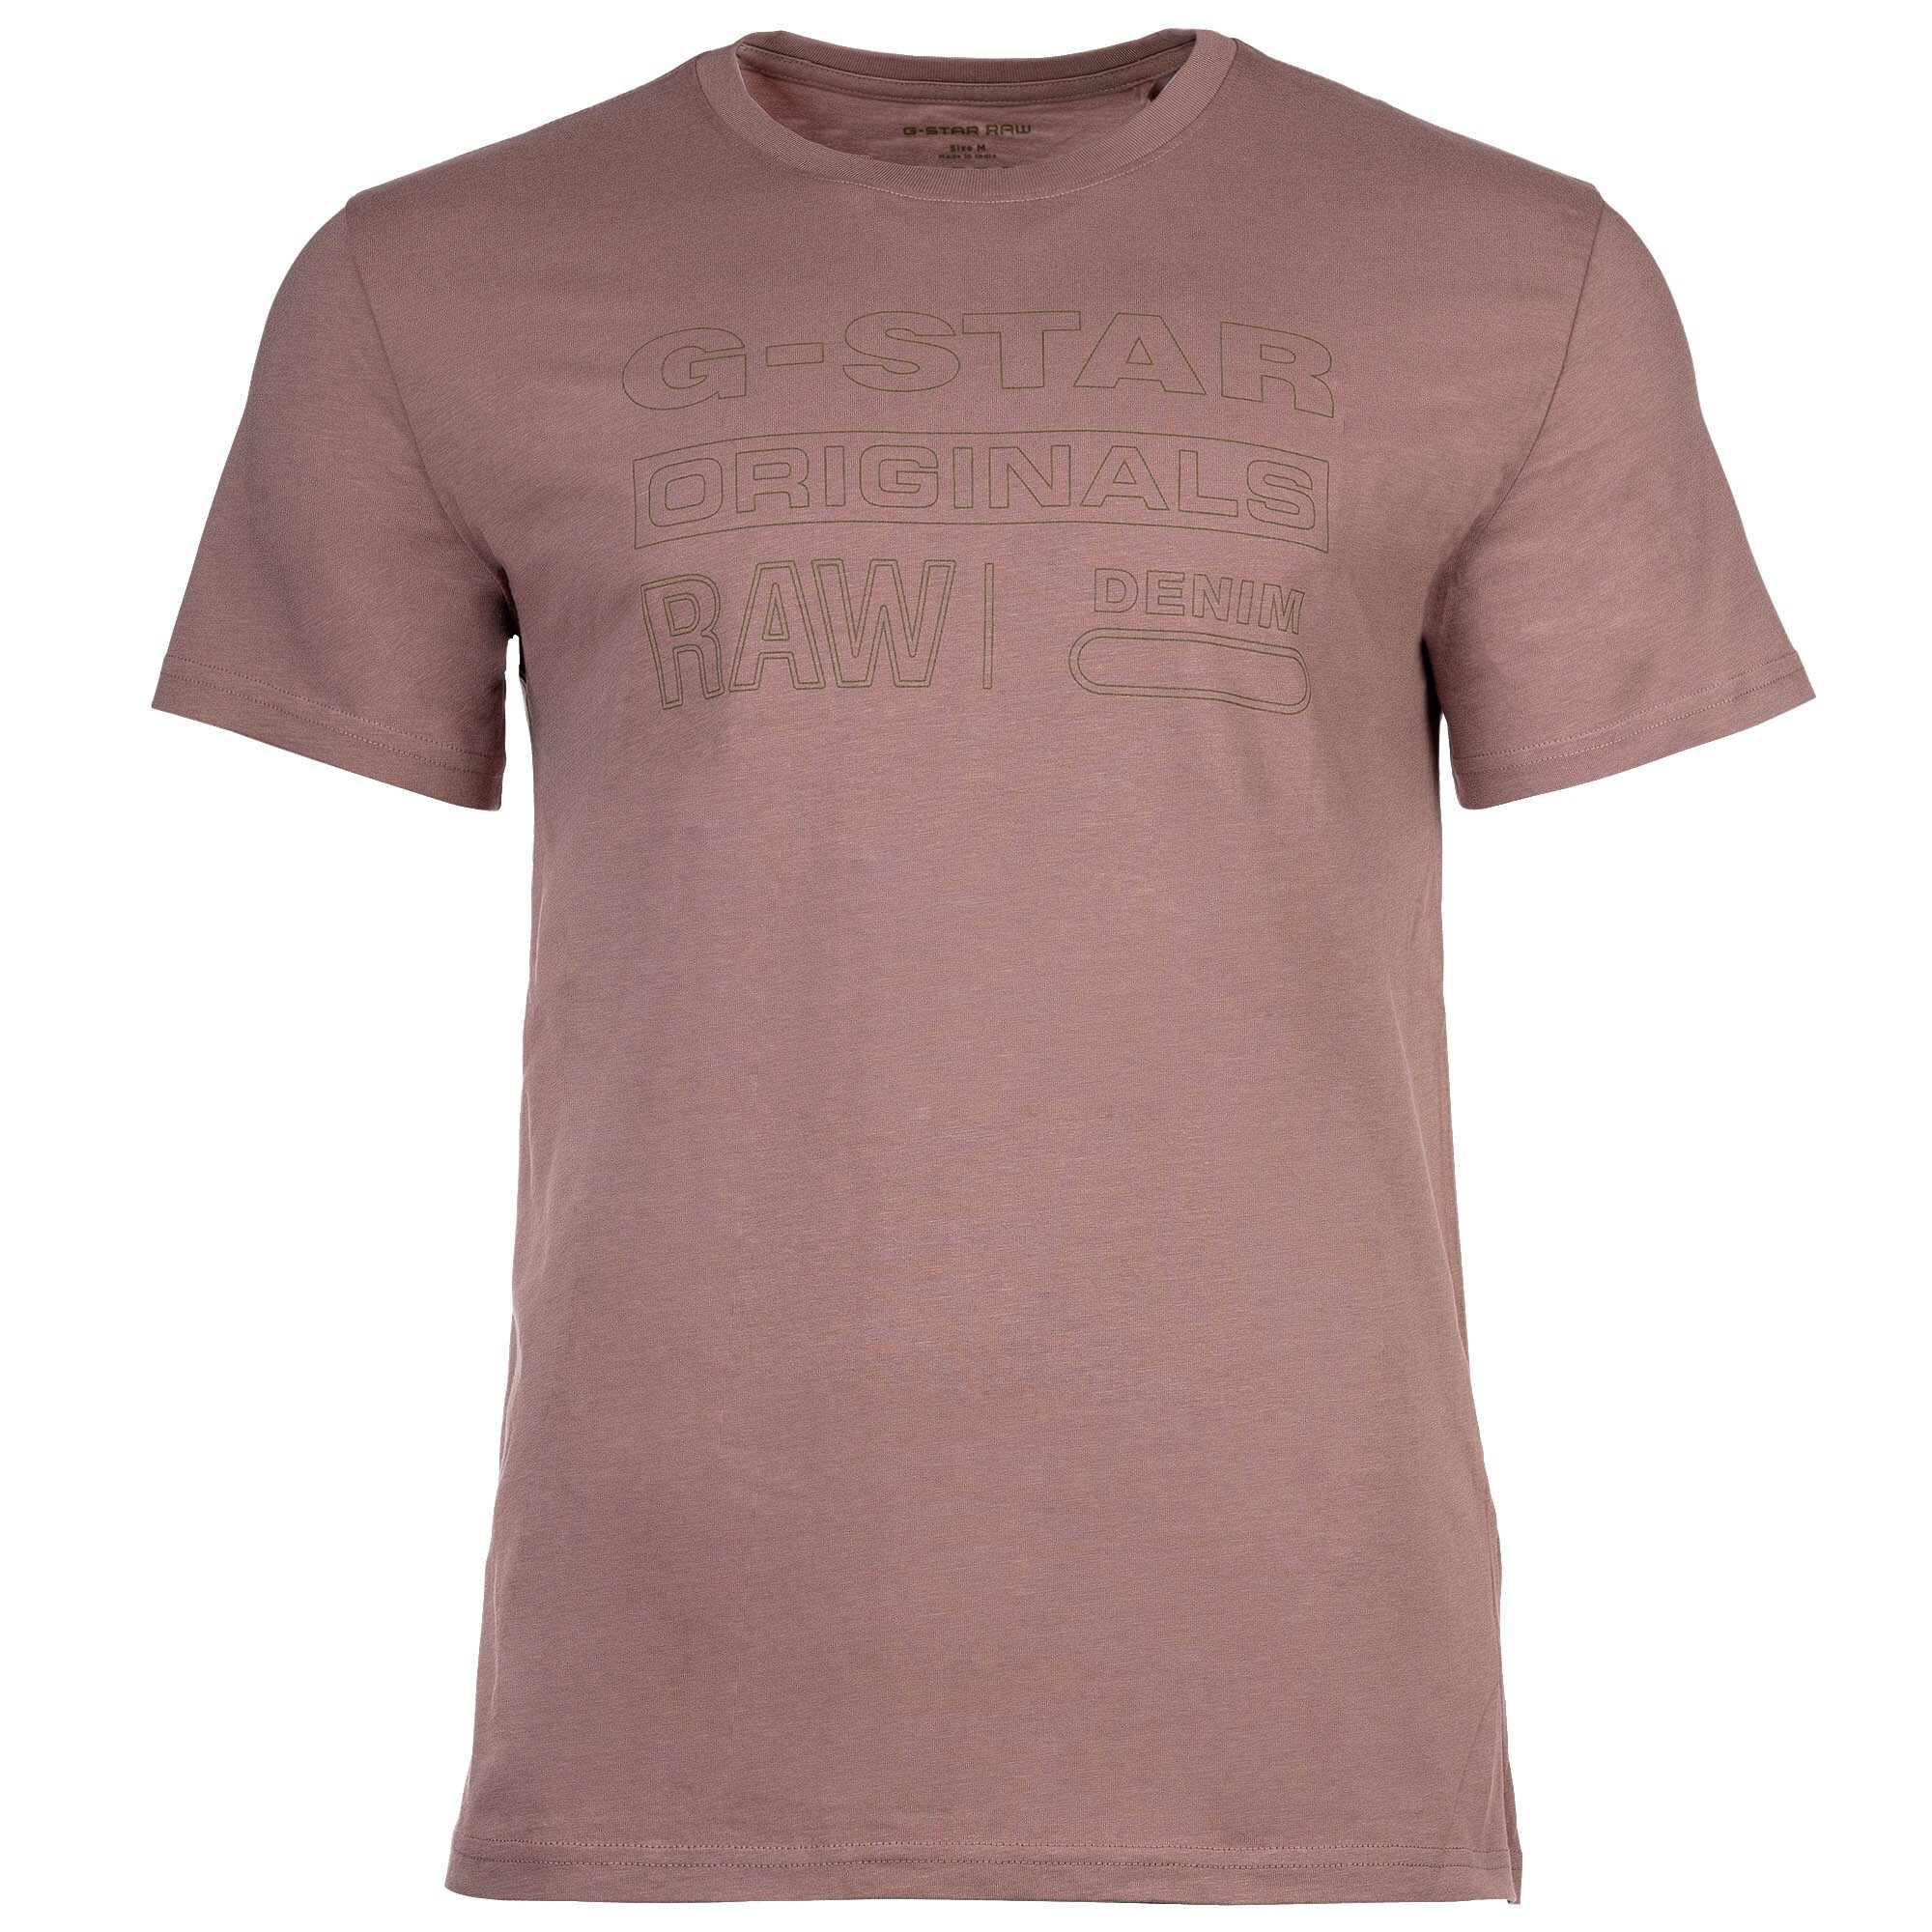 Rundhals, Braun RAW RAW-Logo T-Shirt Originals, - Herren G-Star T-Shirt